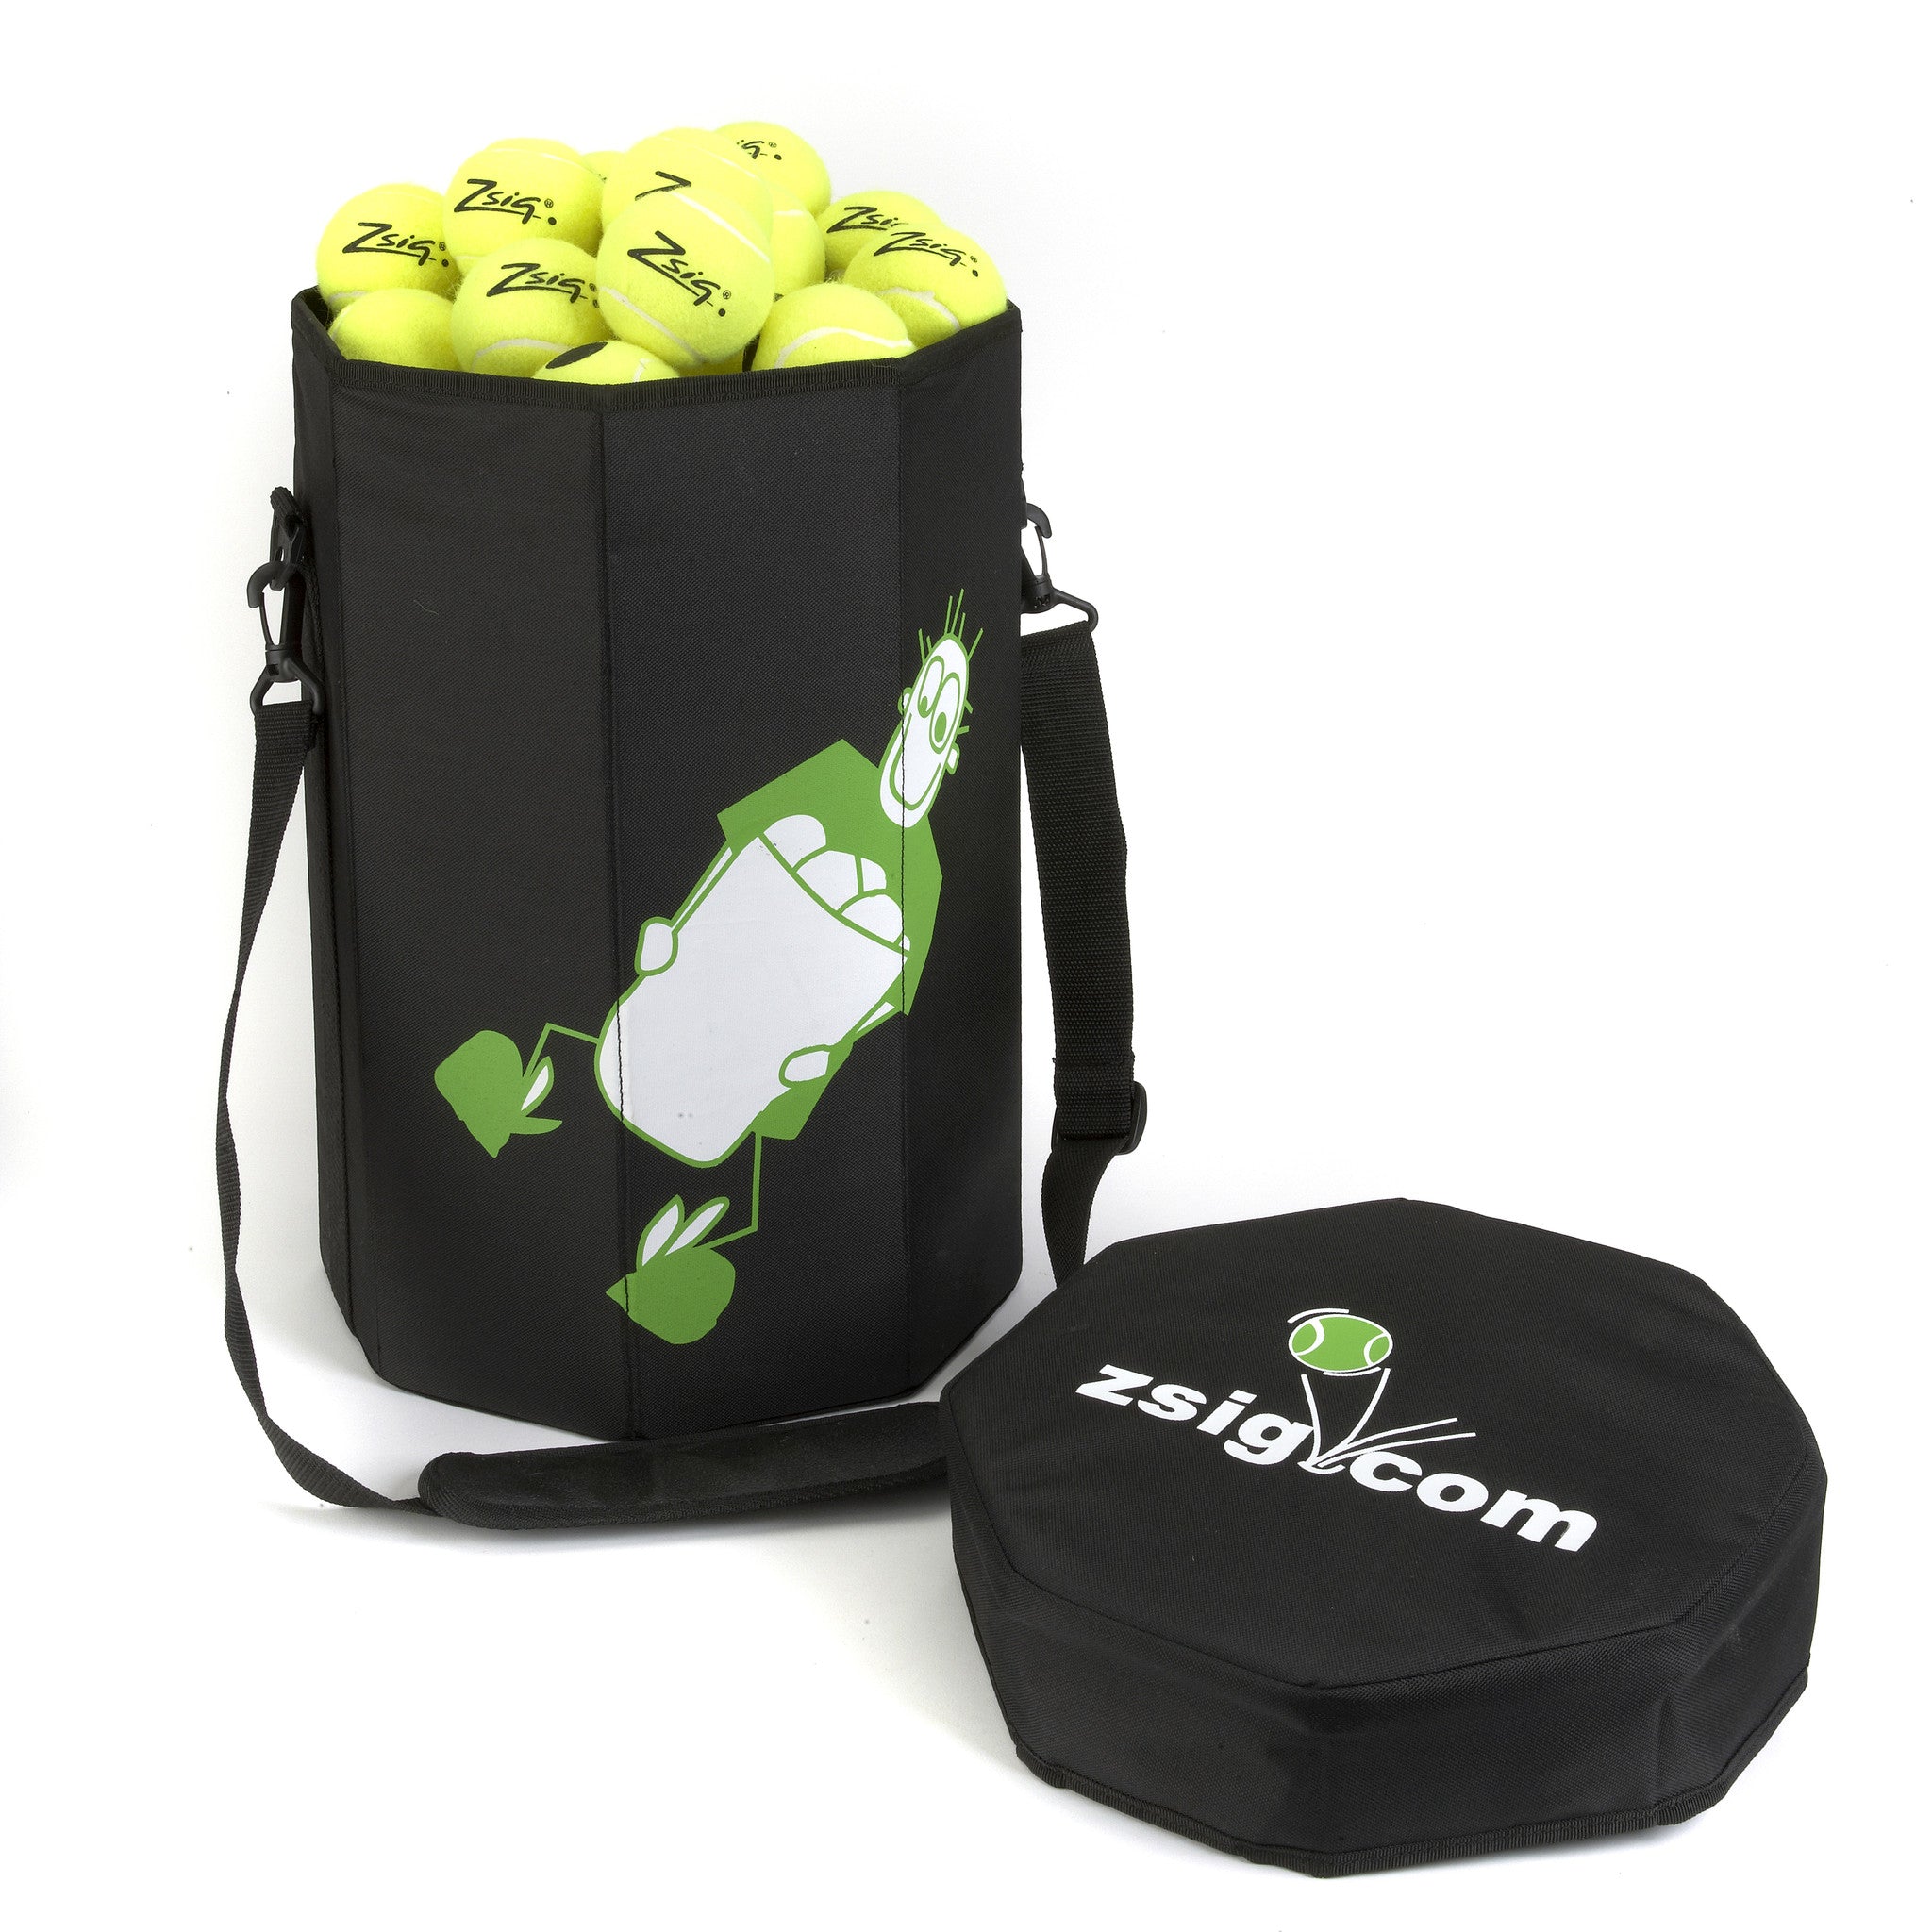 Coaching Aid. Handy tennis ball bucket bag holding 120 regular tennis balls.